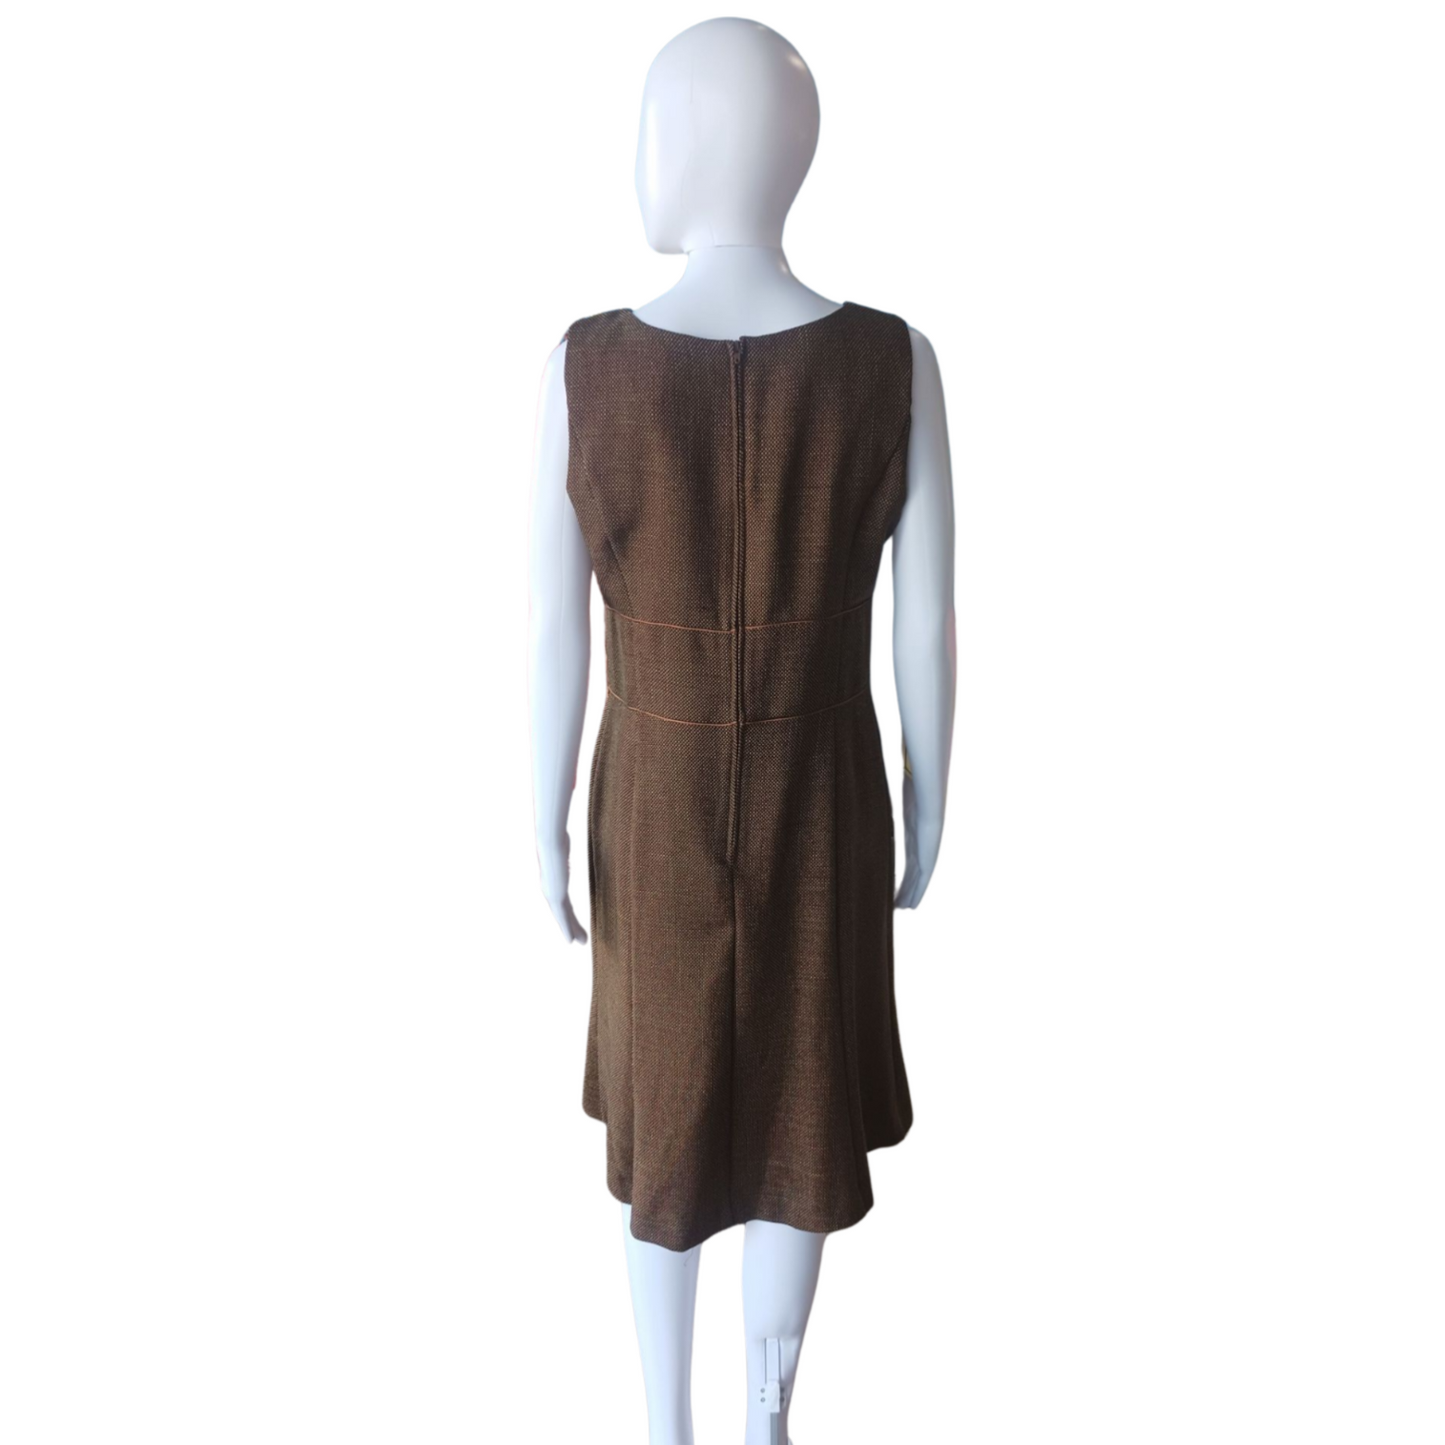 Sag Harbour Brown Sleeveless Dress, Size 10